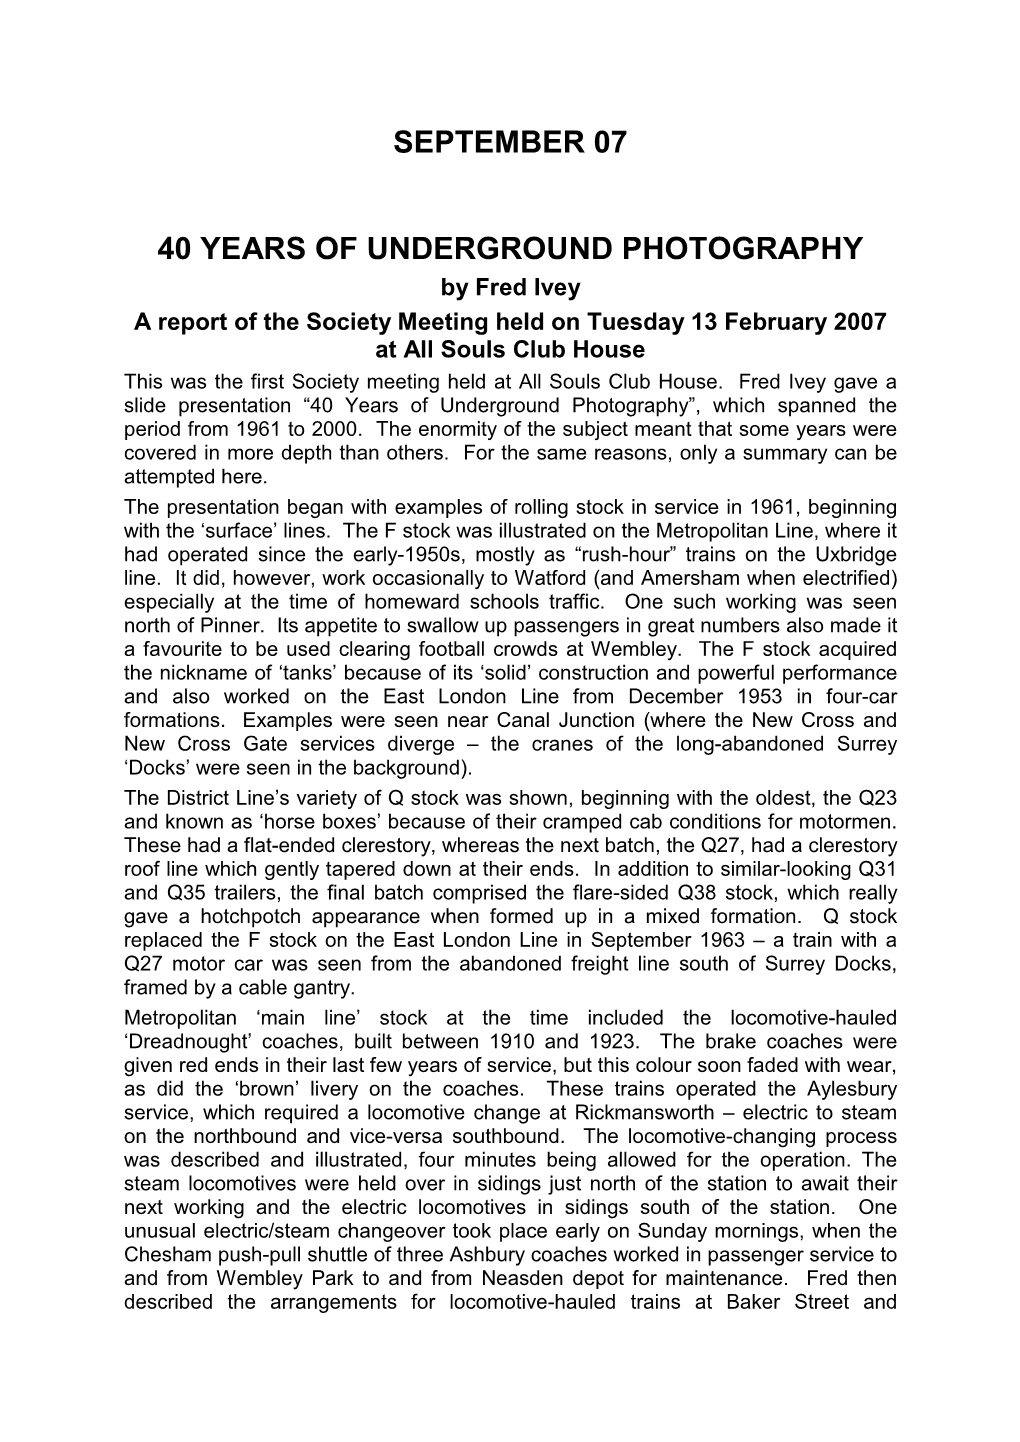 September 07 40 Years of Underground Photography